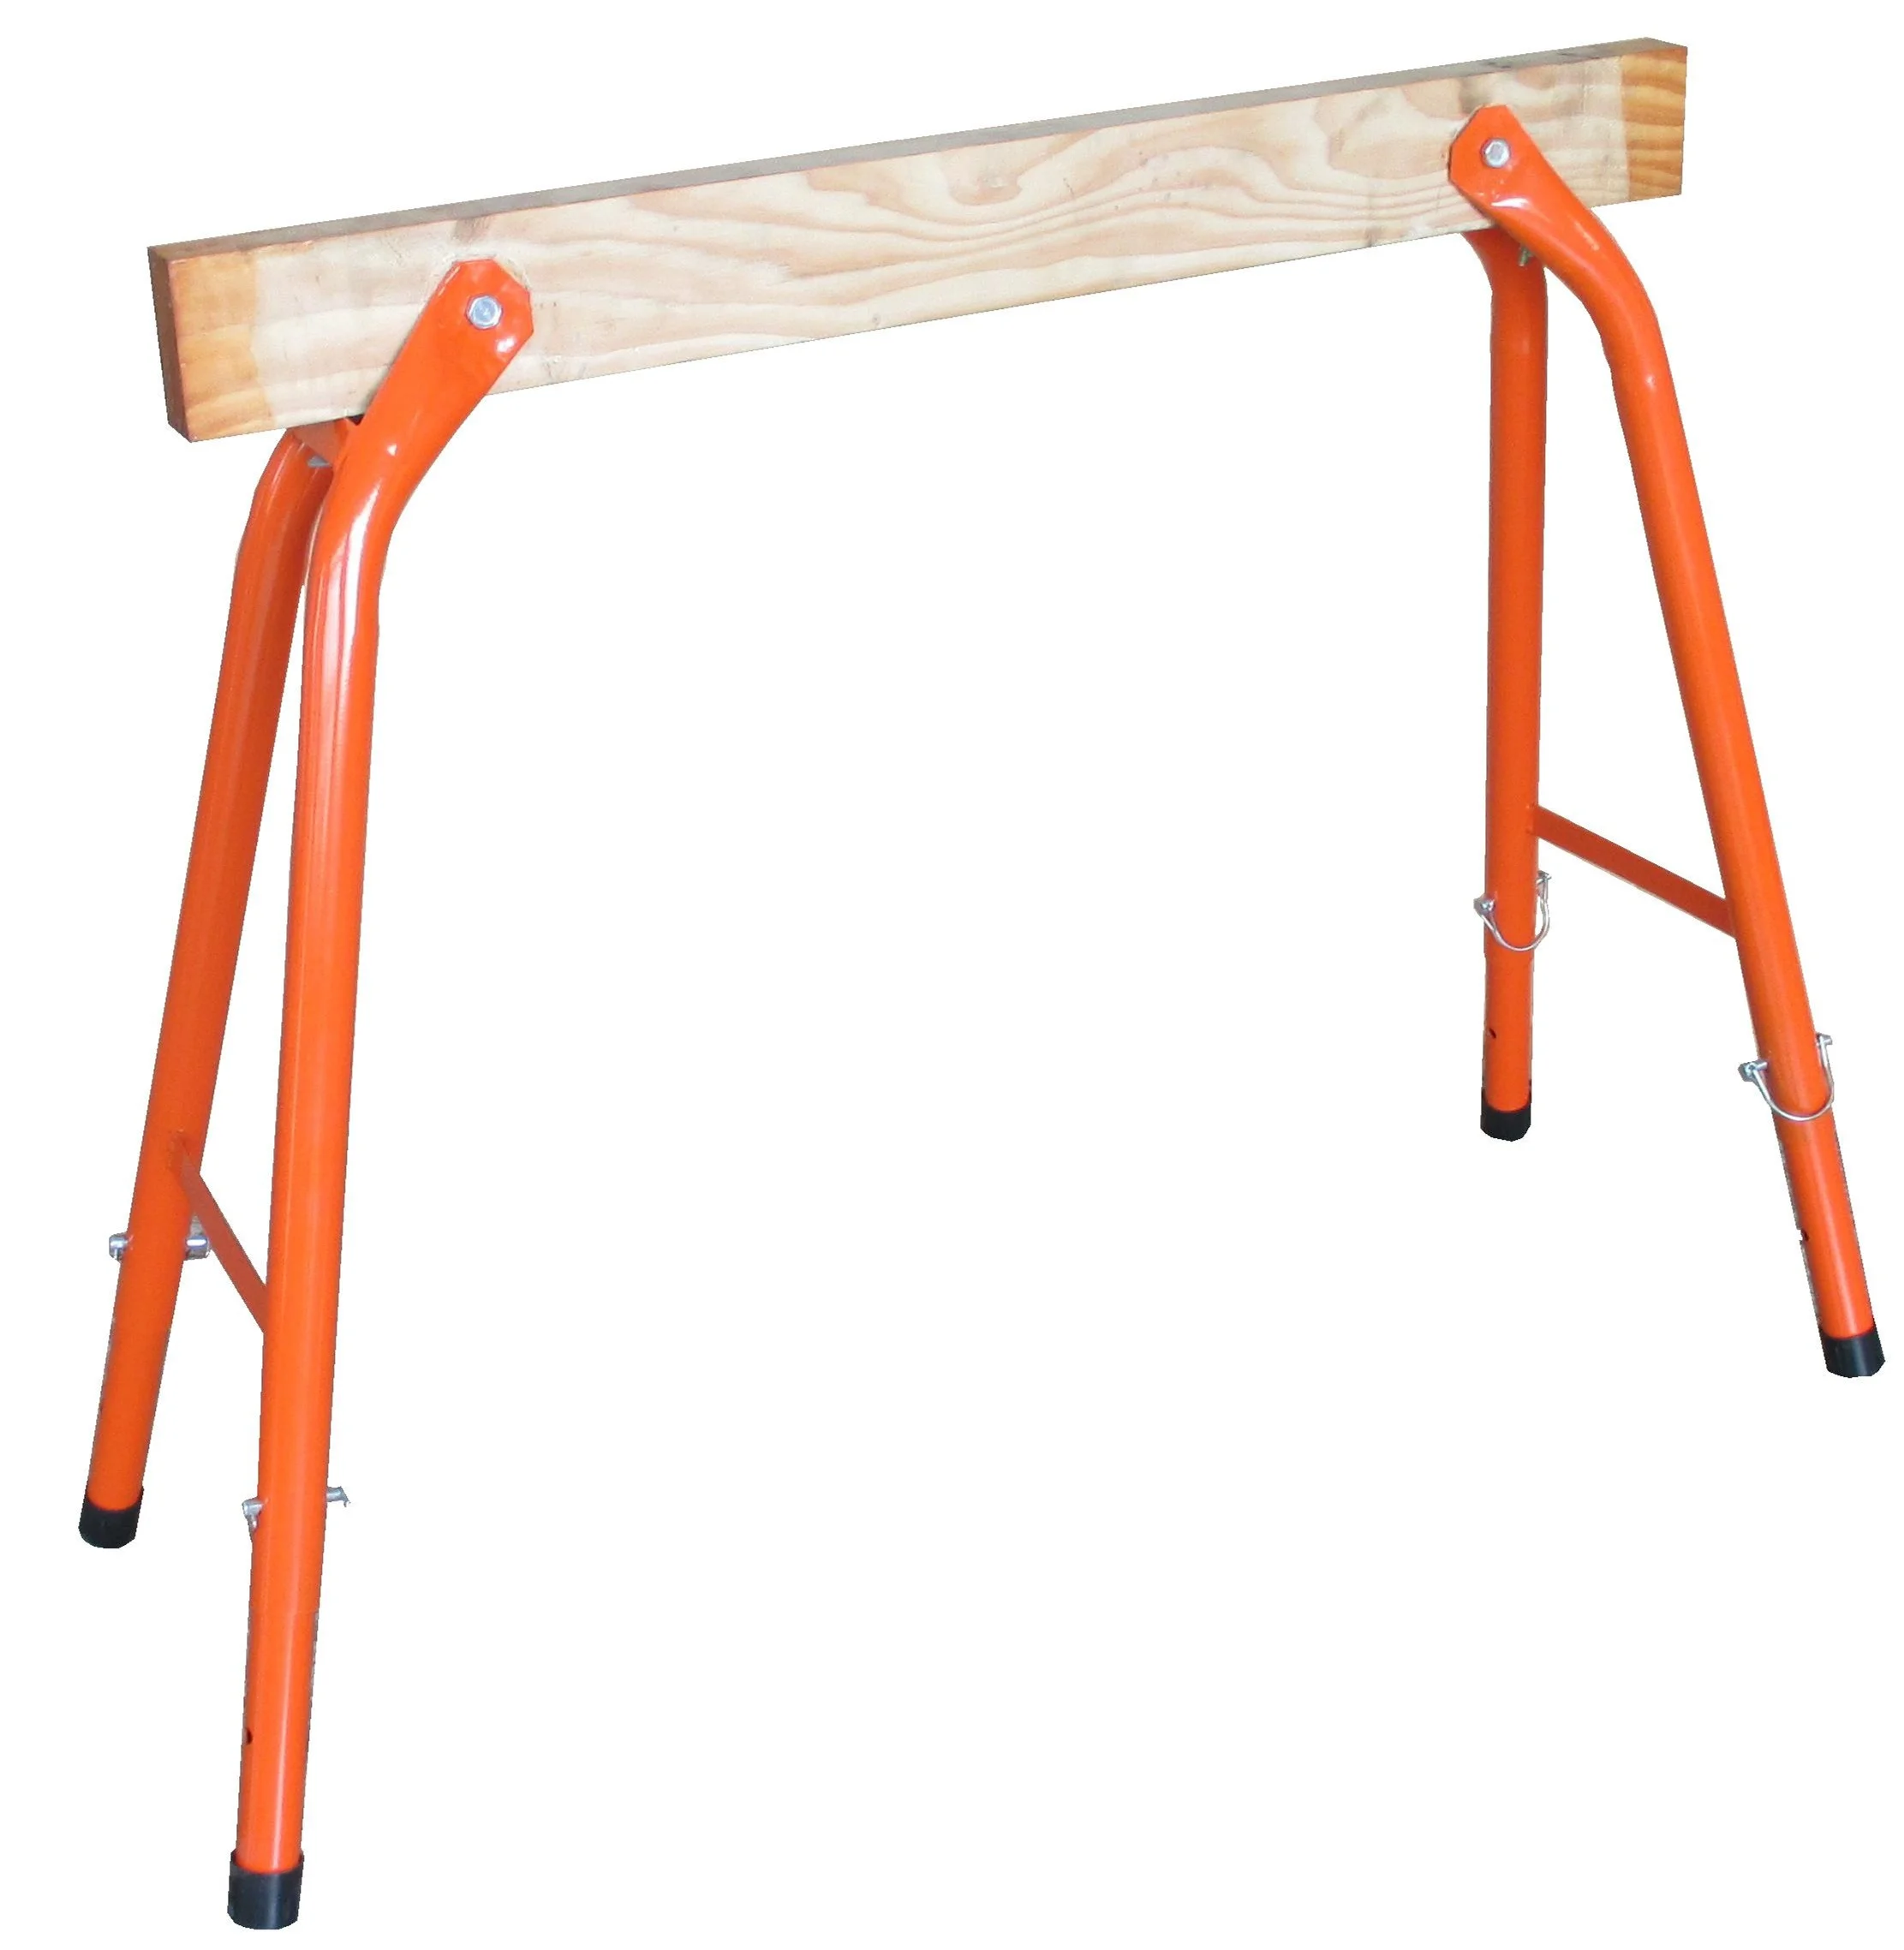 DX-2040 Adjustable steel bow set 2 pcs, Tall Metal saw horse trestles Steel wood platform Wood bench for sawing wood